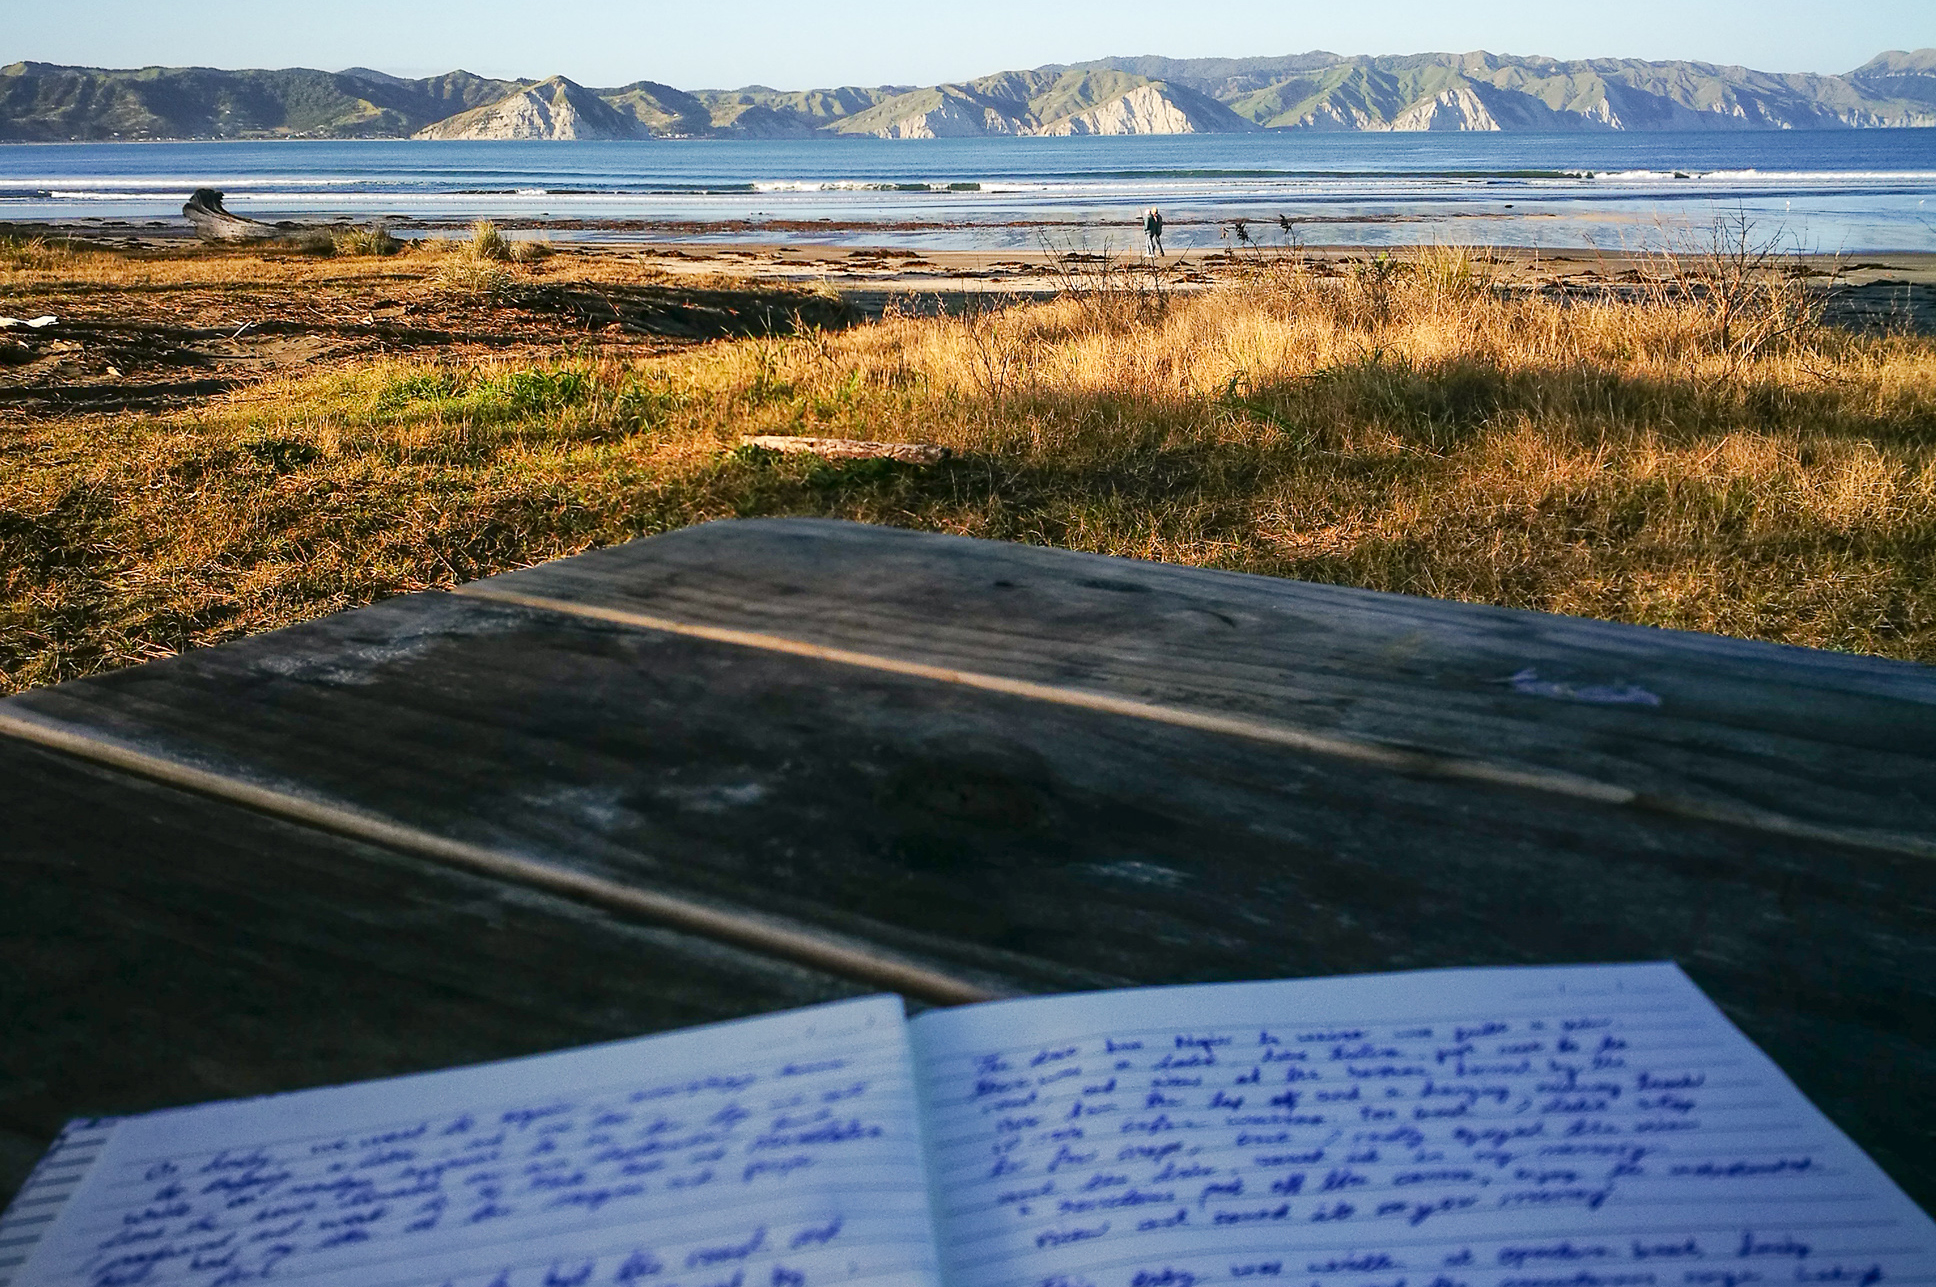 journal writing near a beach